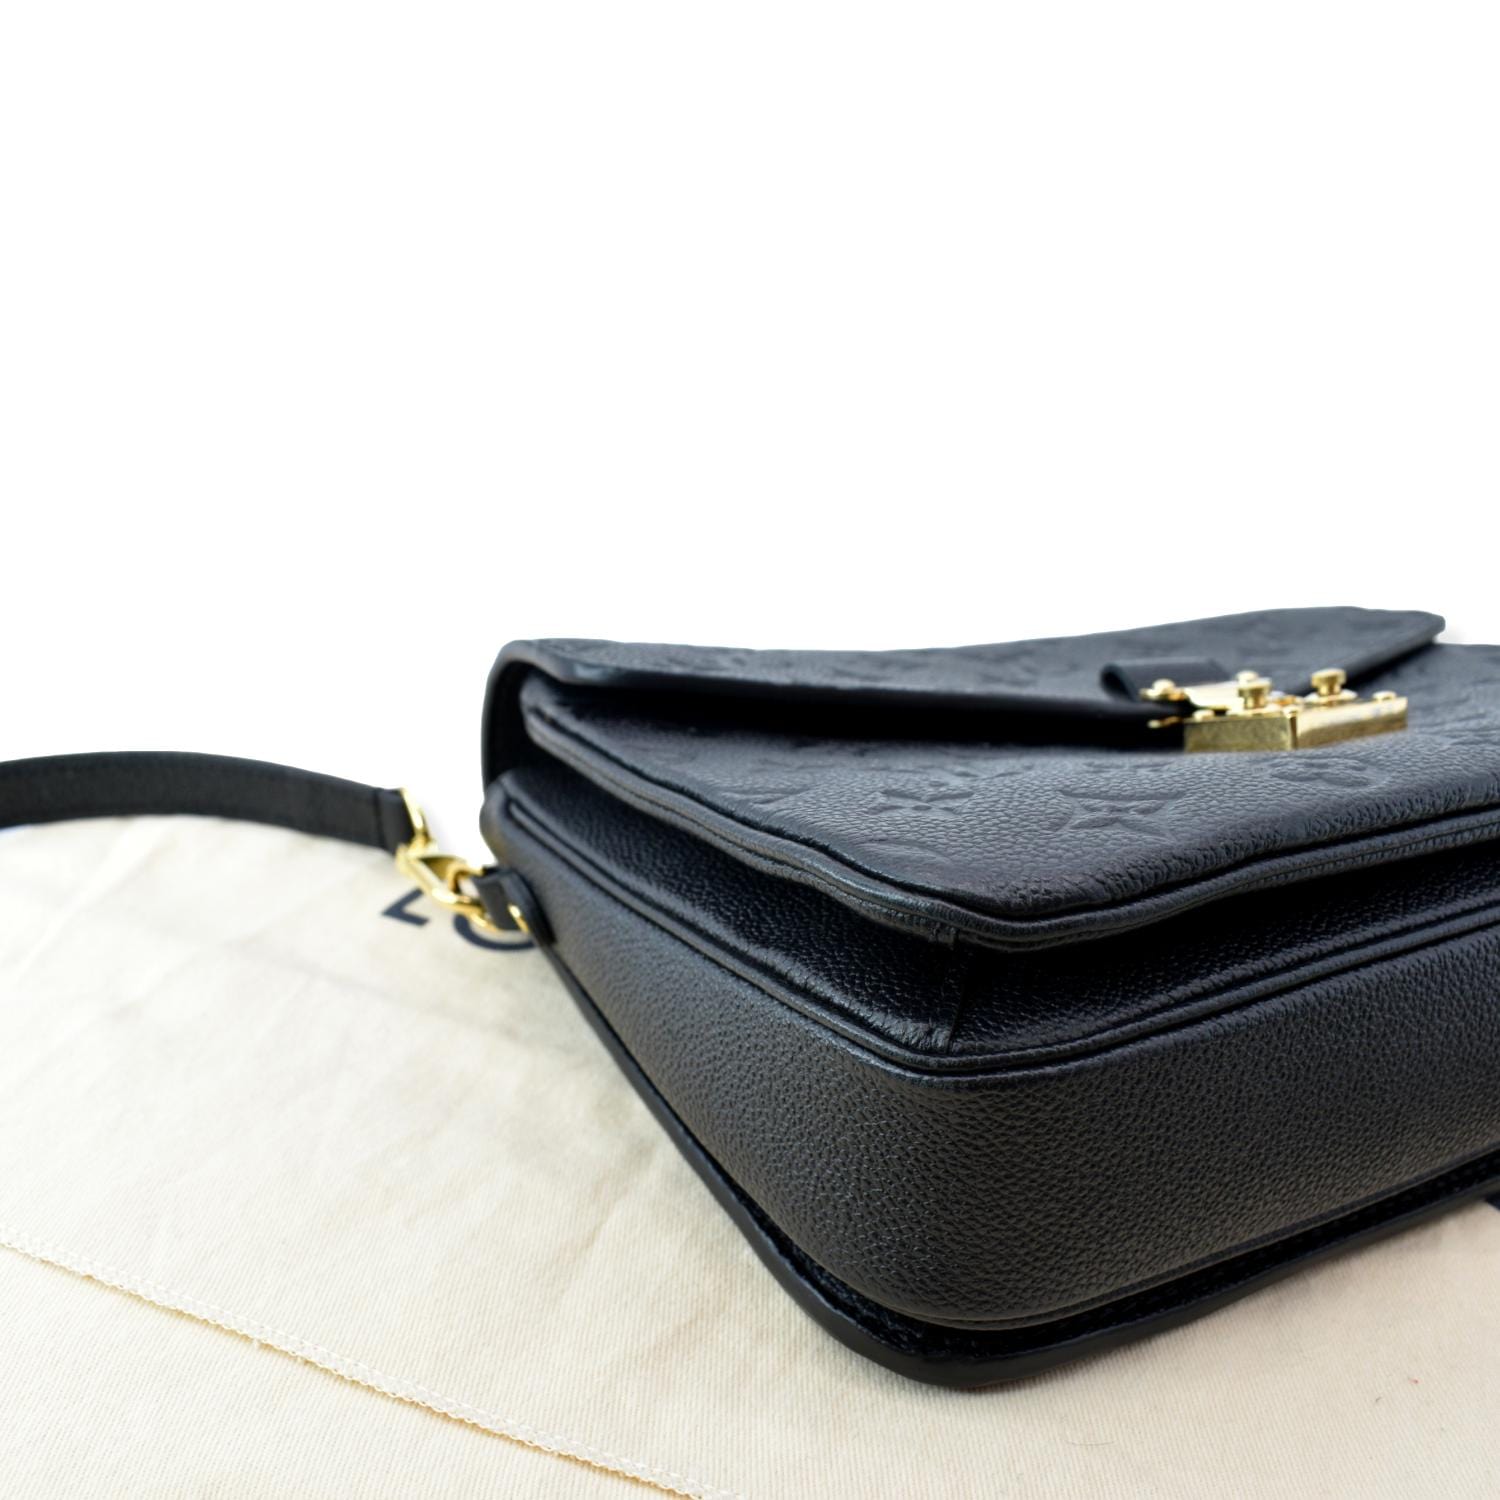 ABDLOUISVUITTON POCHETTE METIS Black Shoulder Bags Women  Messenger Bags Handbags Tote Satchel Purse C2GHG From Wangtao8888, $28.65